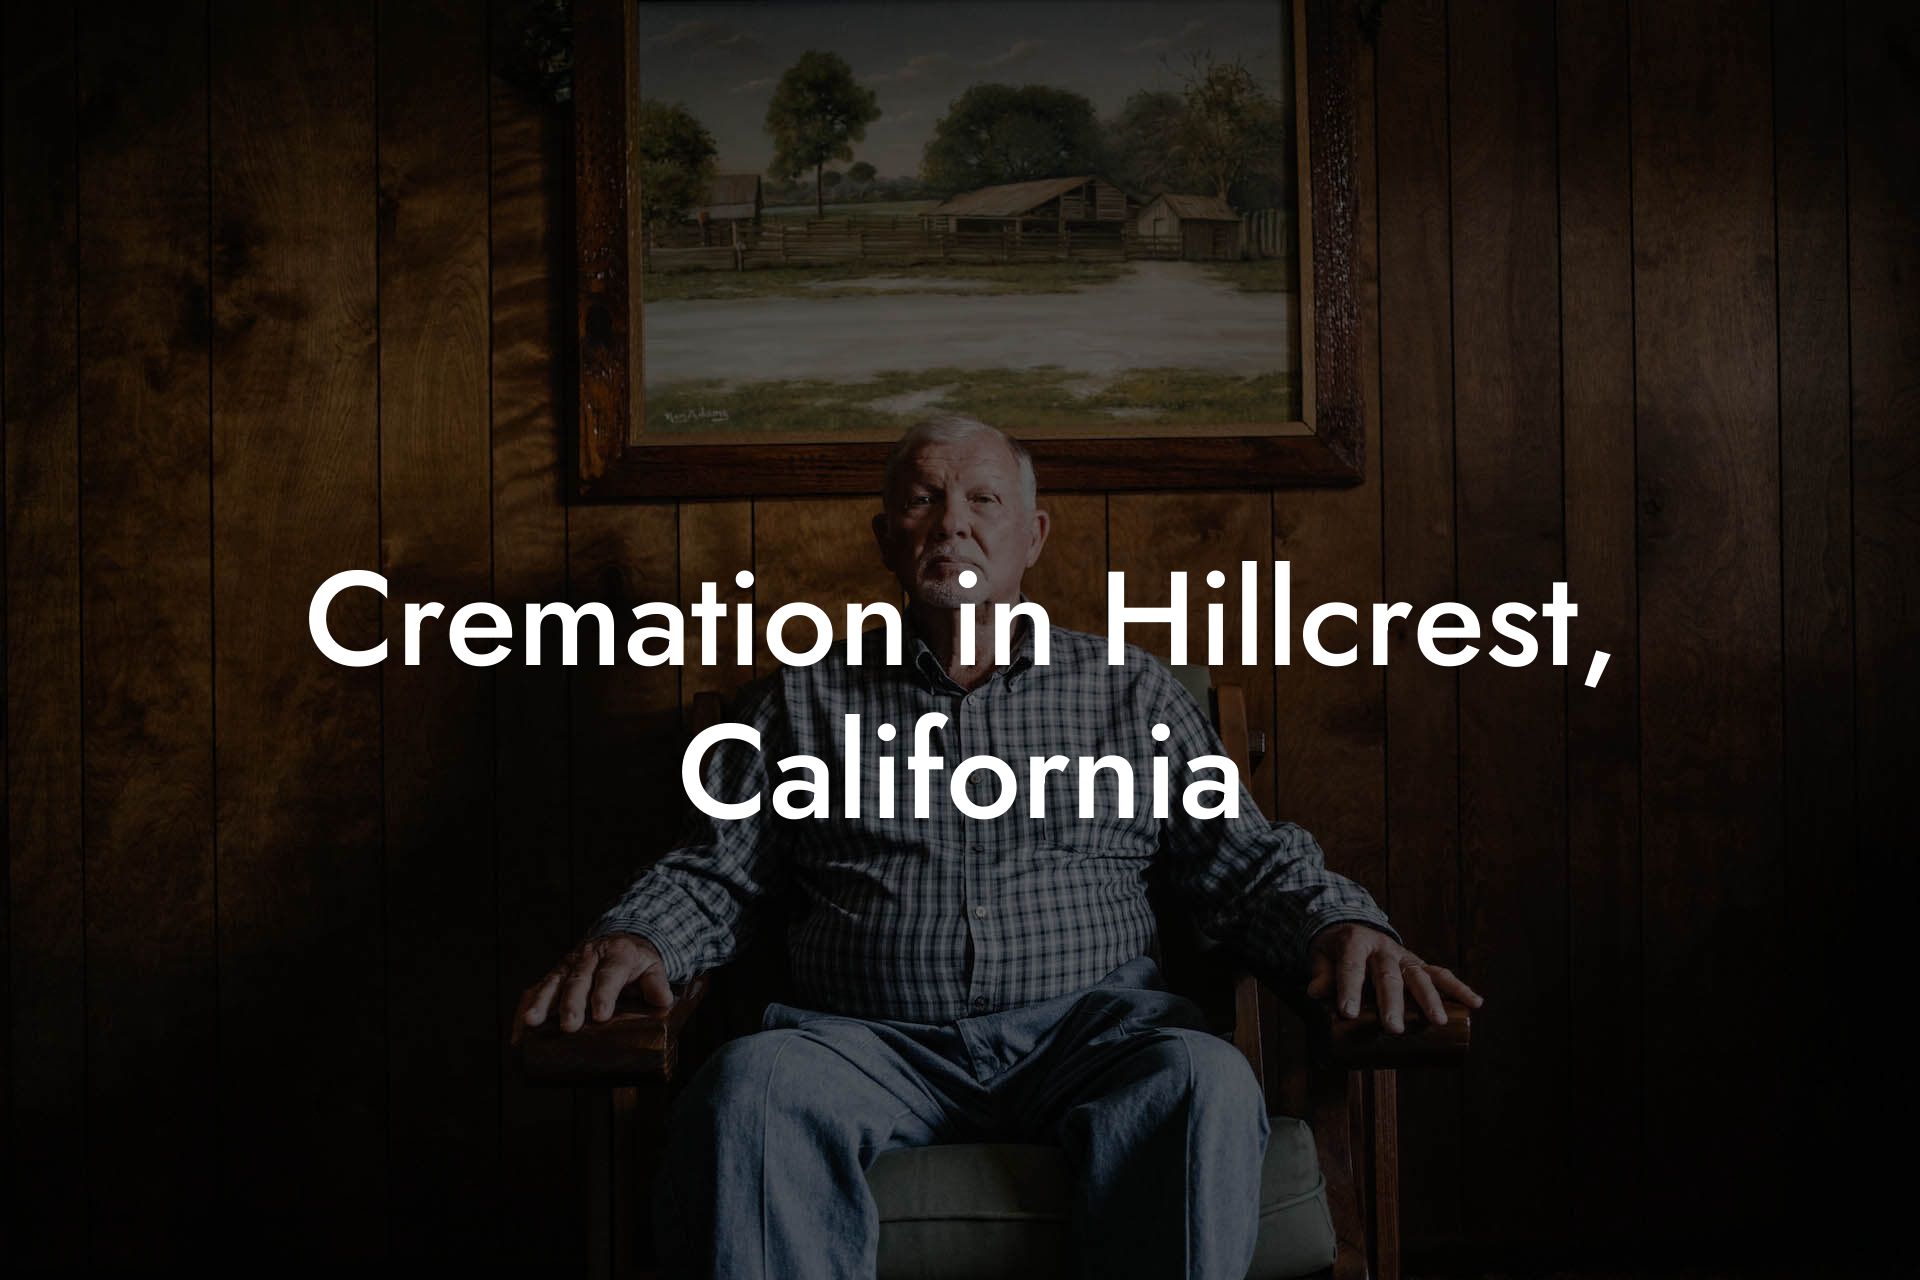 Cremation in Hillcrest, California